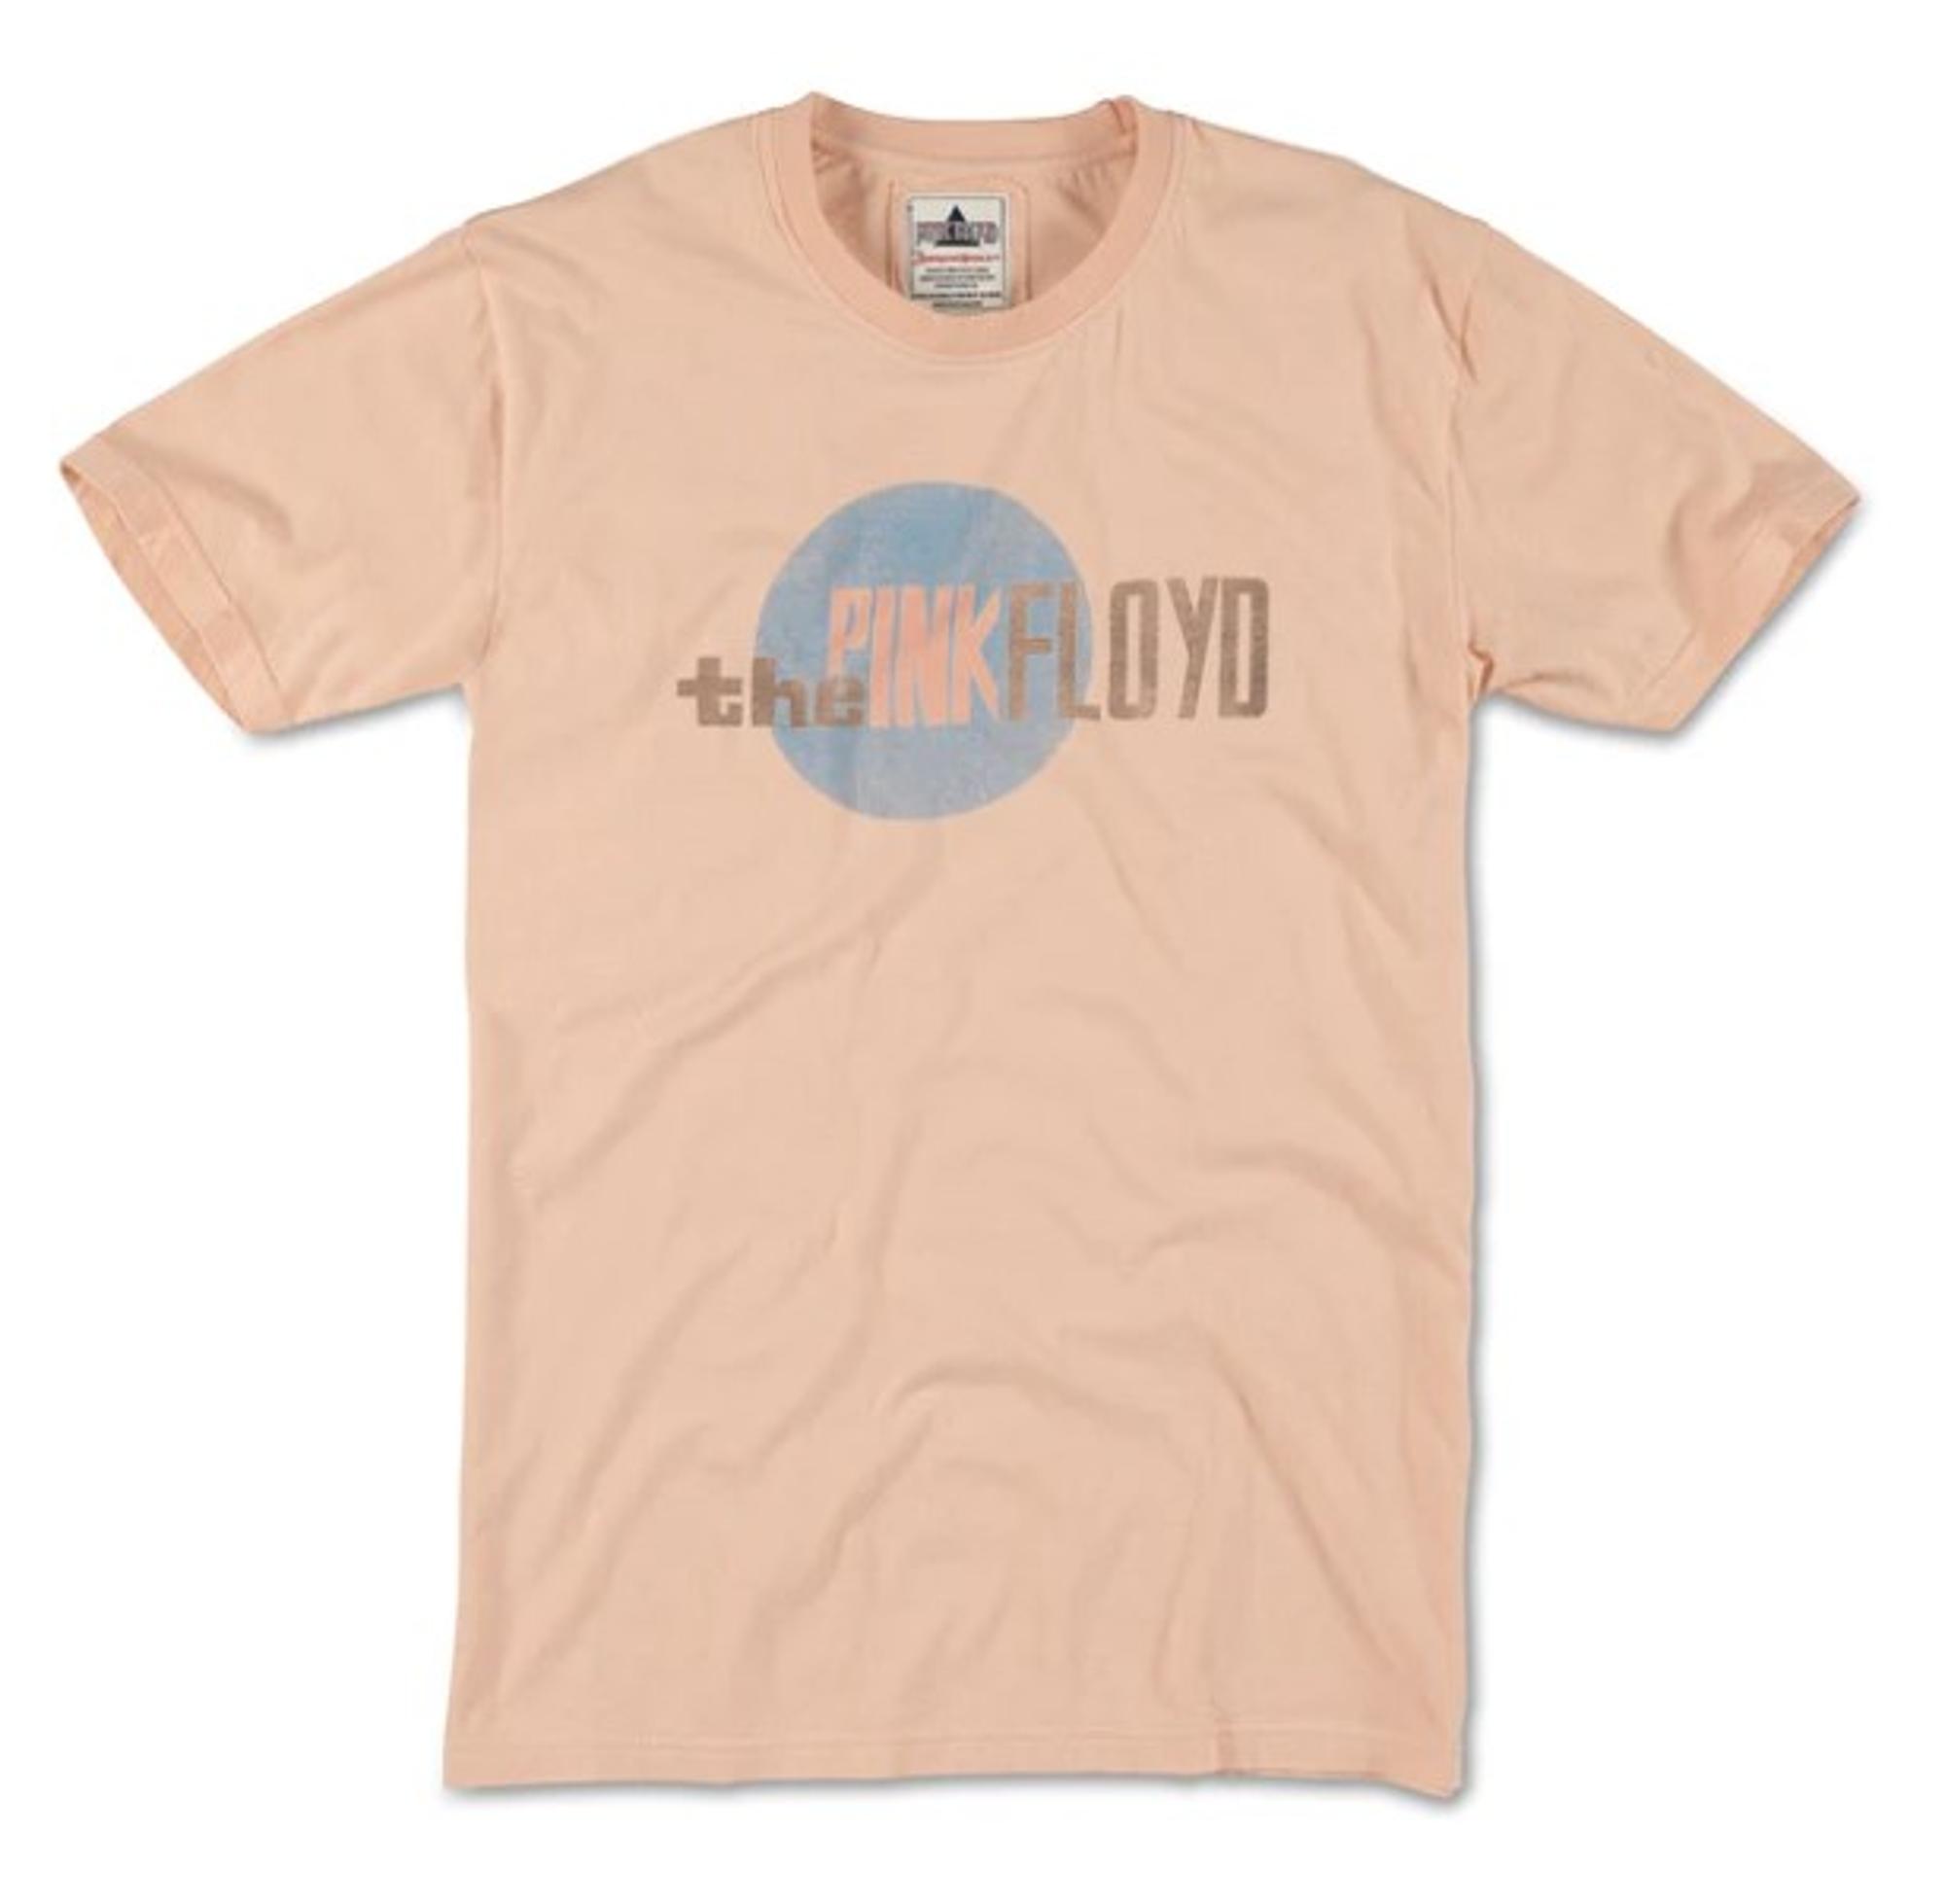 Vintage Fade Brass Tacks Pink Floyd Short Sleeve Tshirt